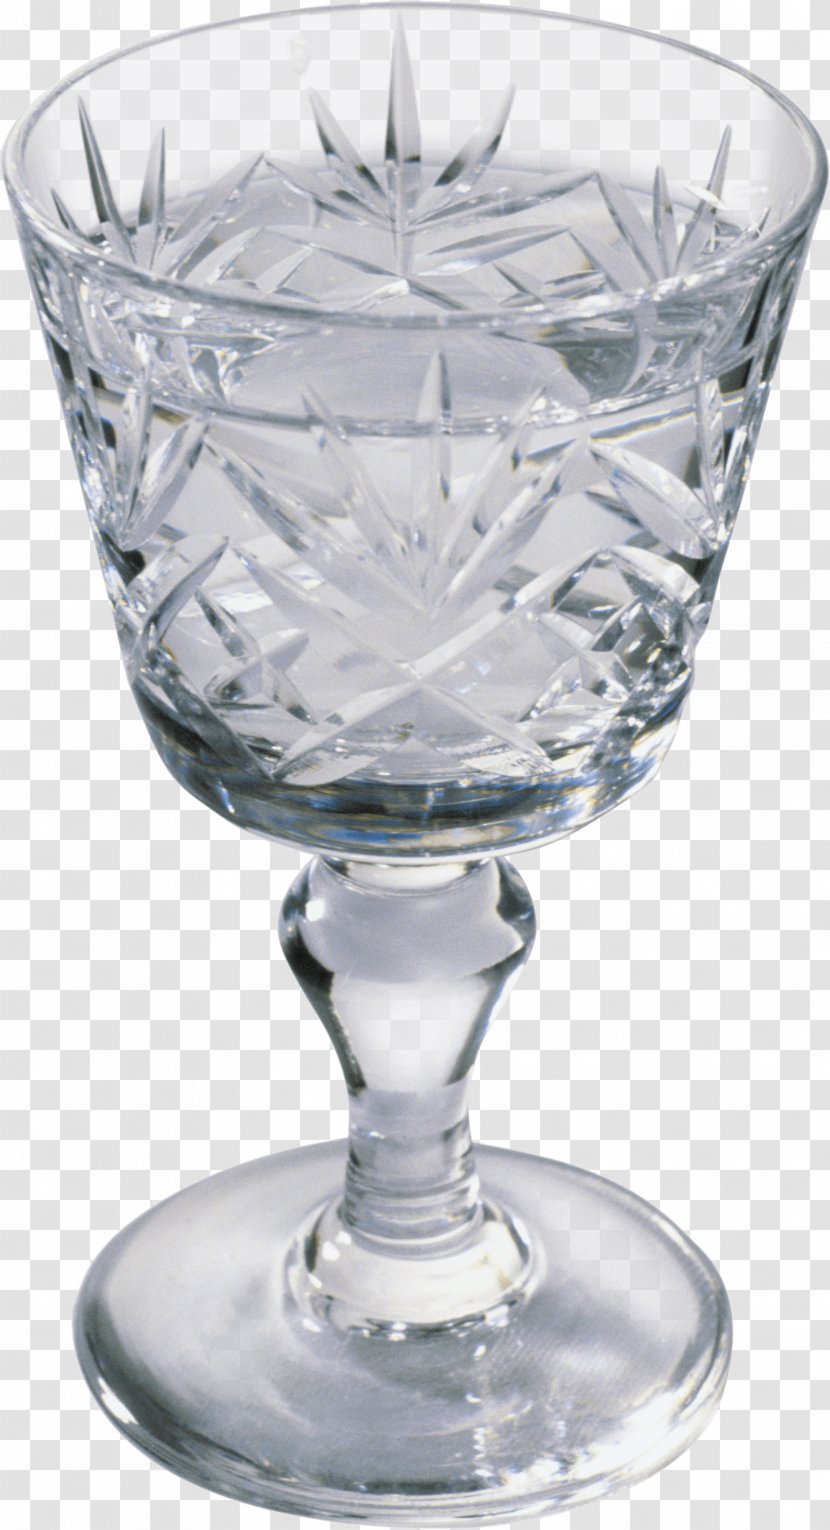 Vodka - Champagne Stemware - Glass Image Transparent PNG